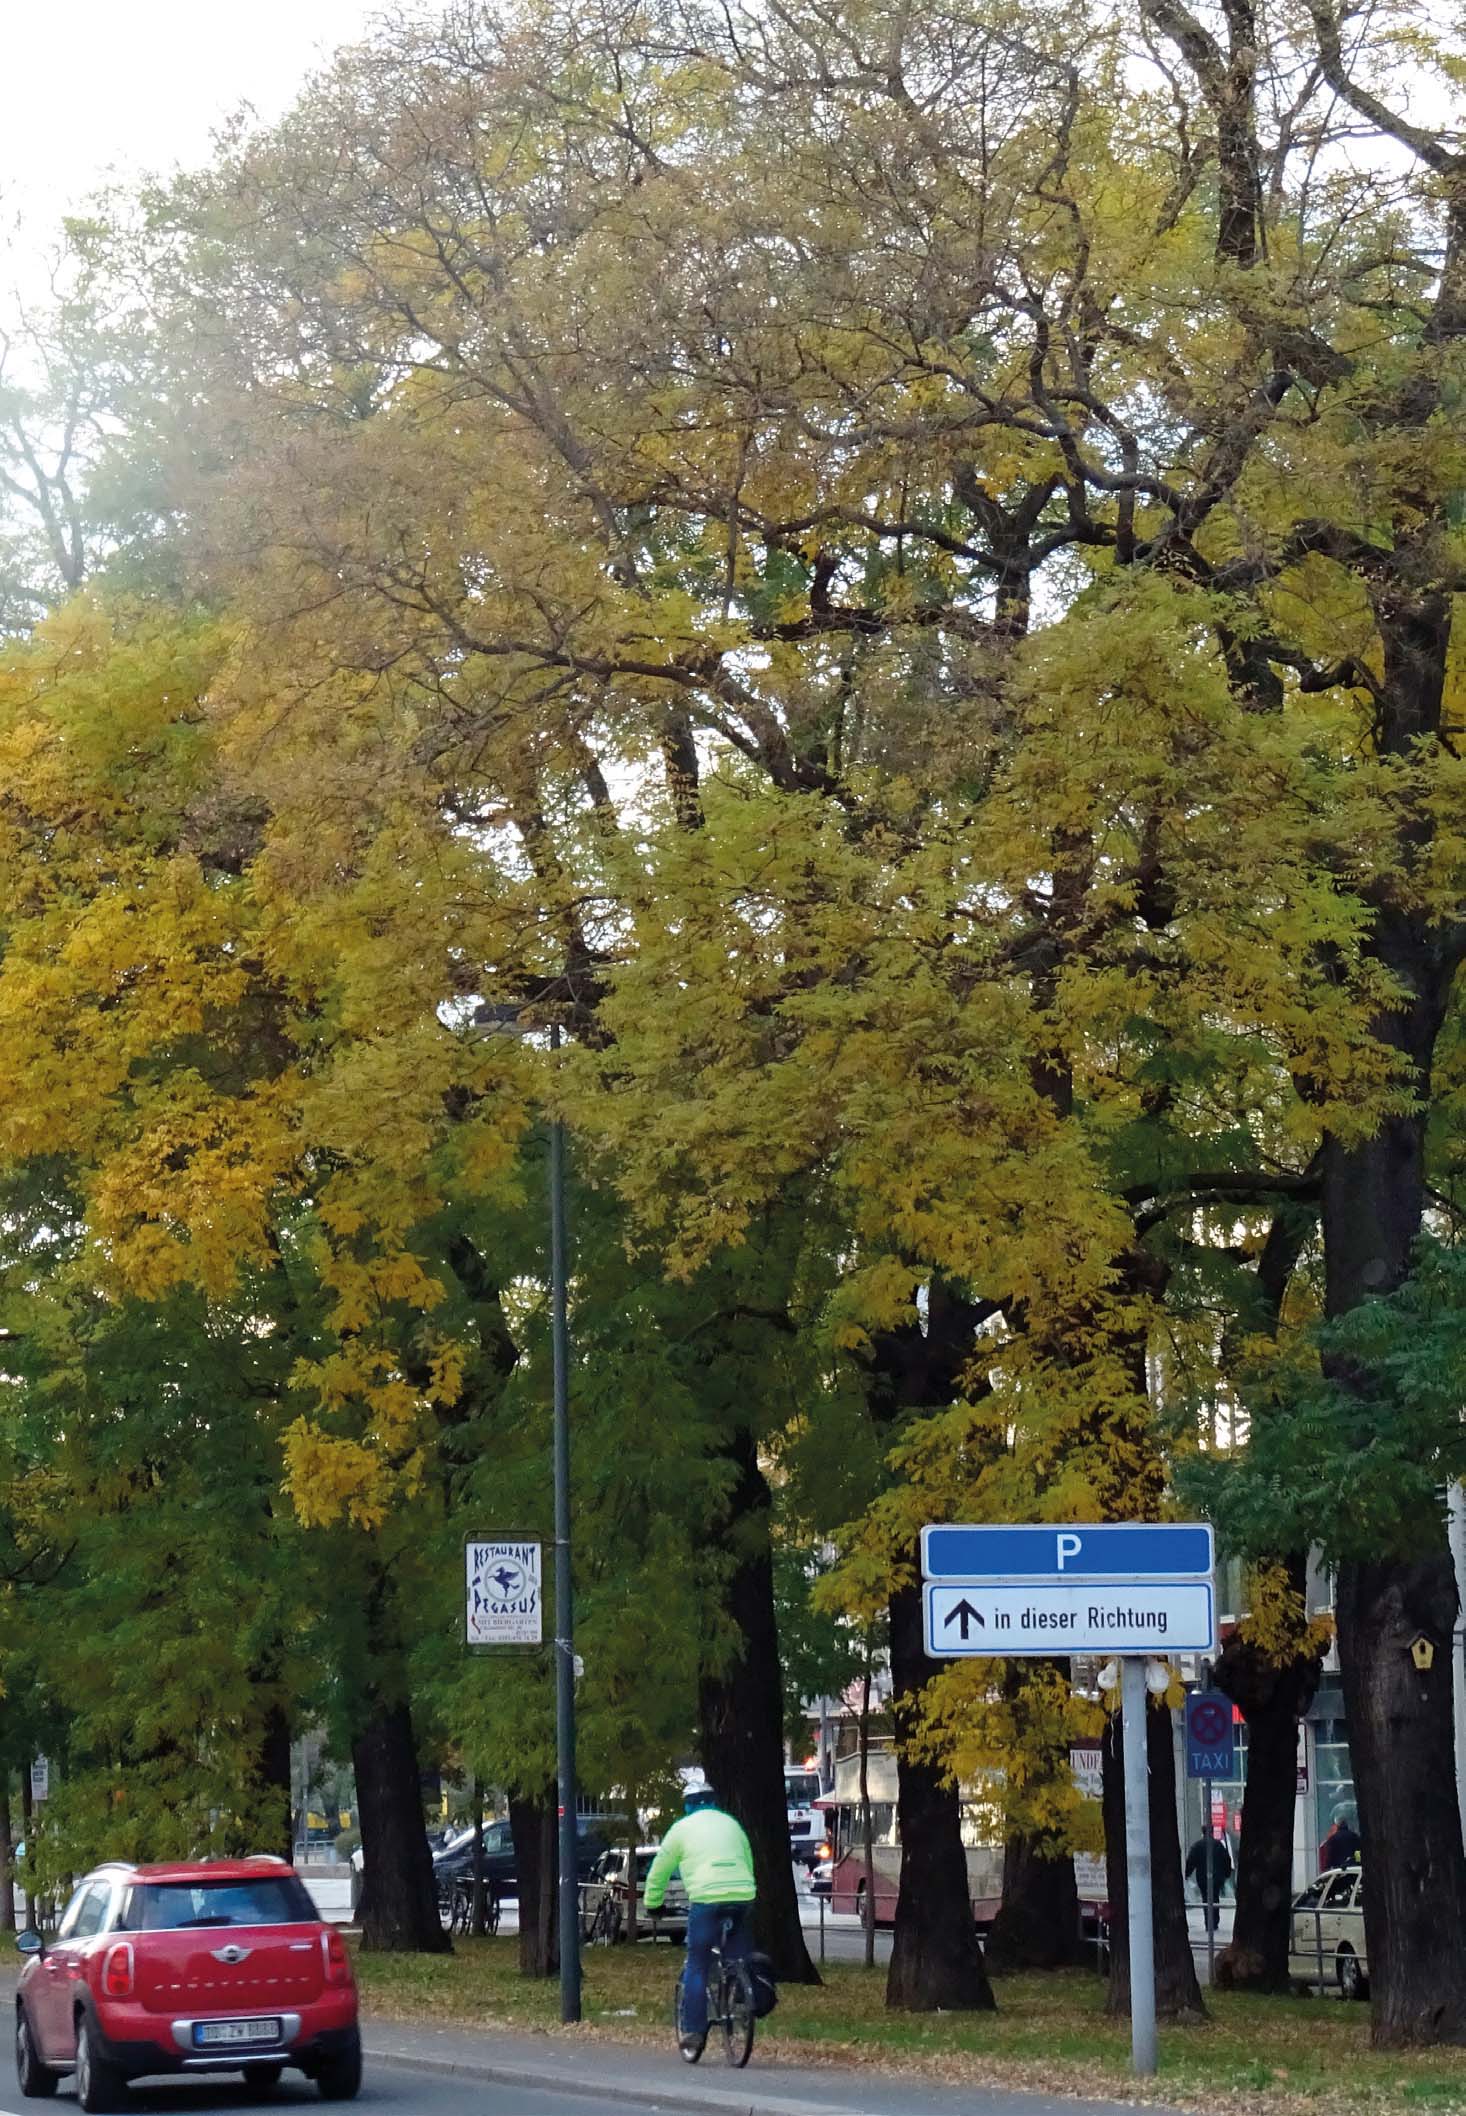 Mature Styphnolobium japonicum showing autumn colour in Dresden, Germany.